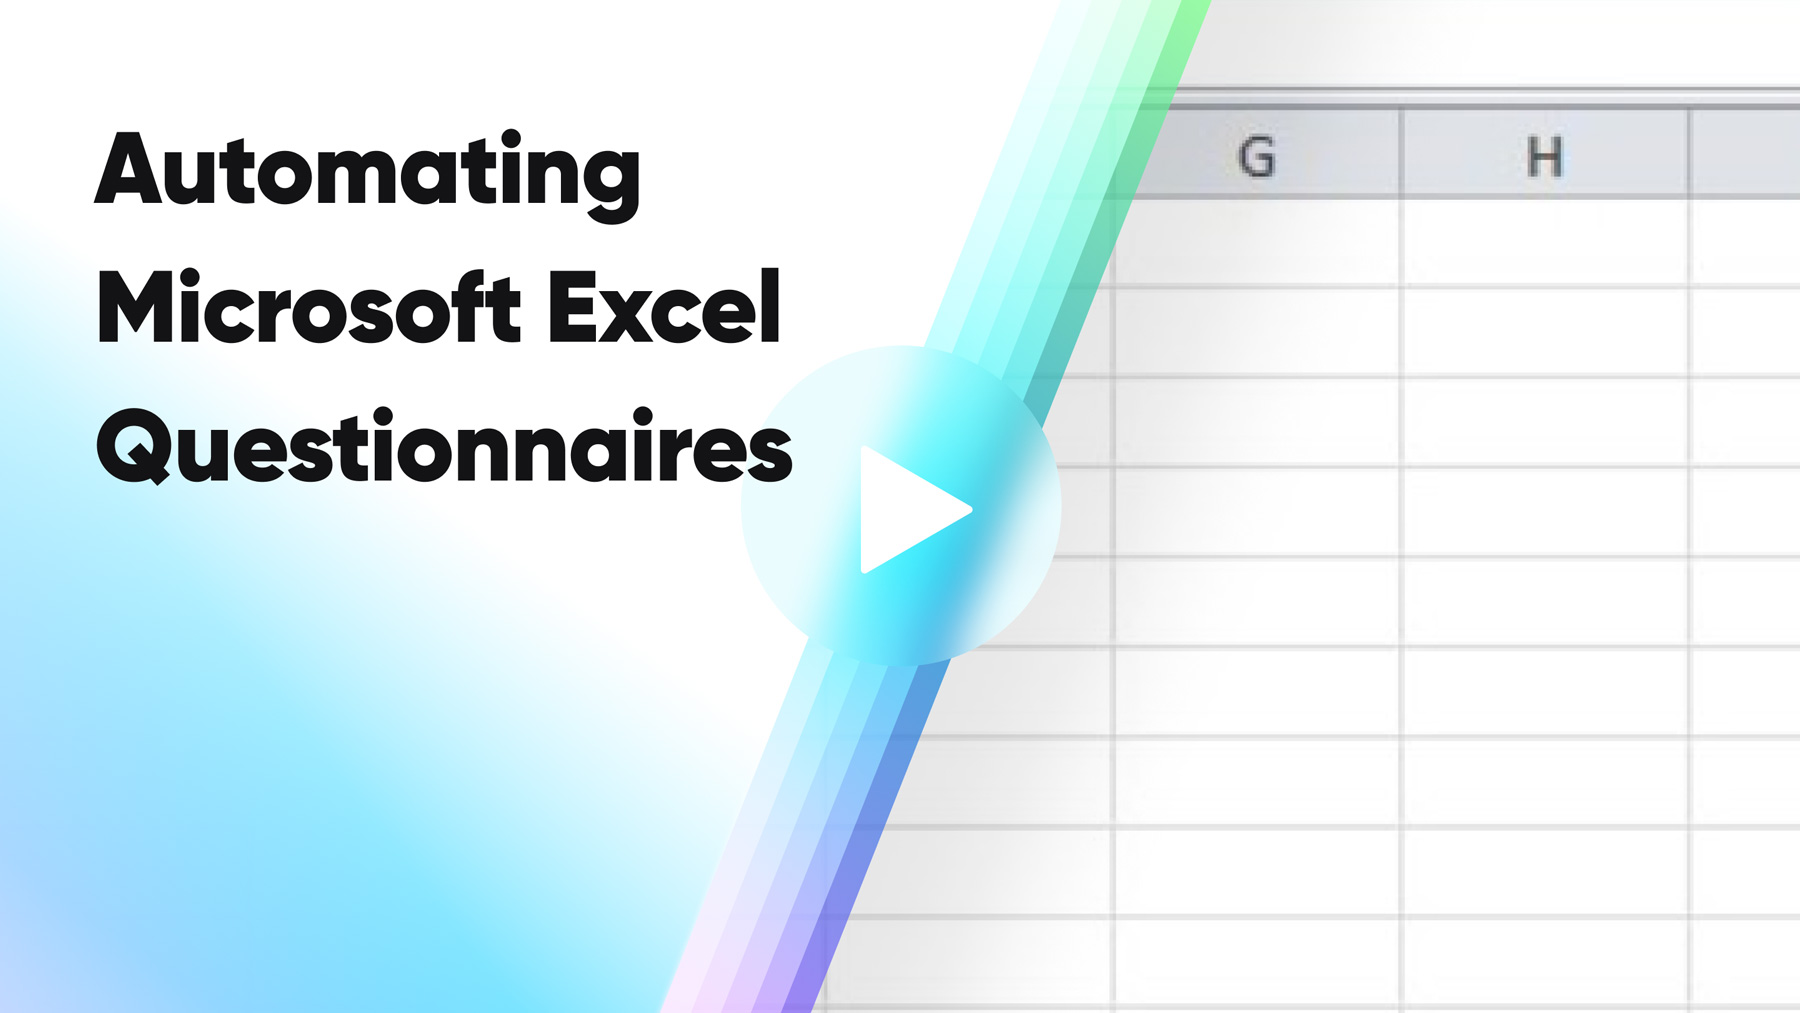 Automate Microsoft Excel Questionnaires